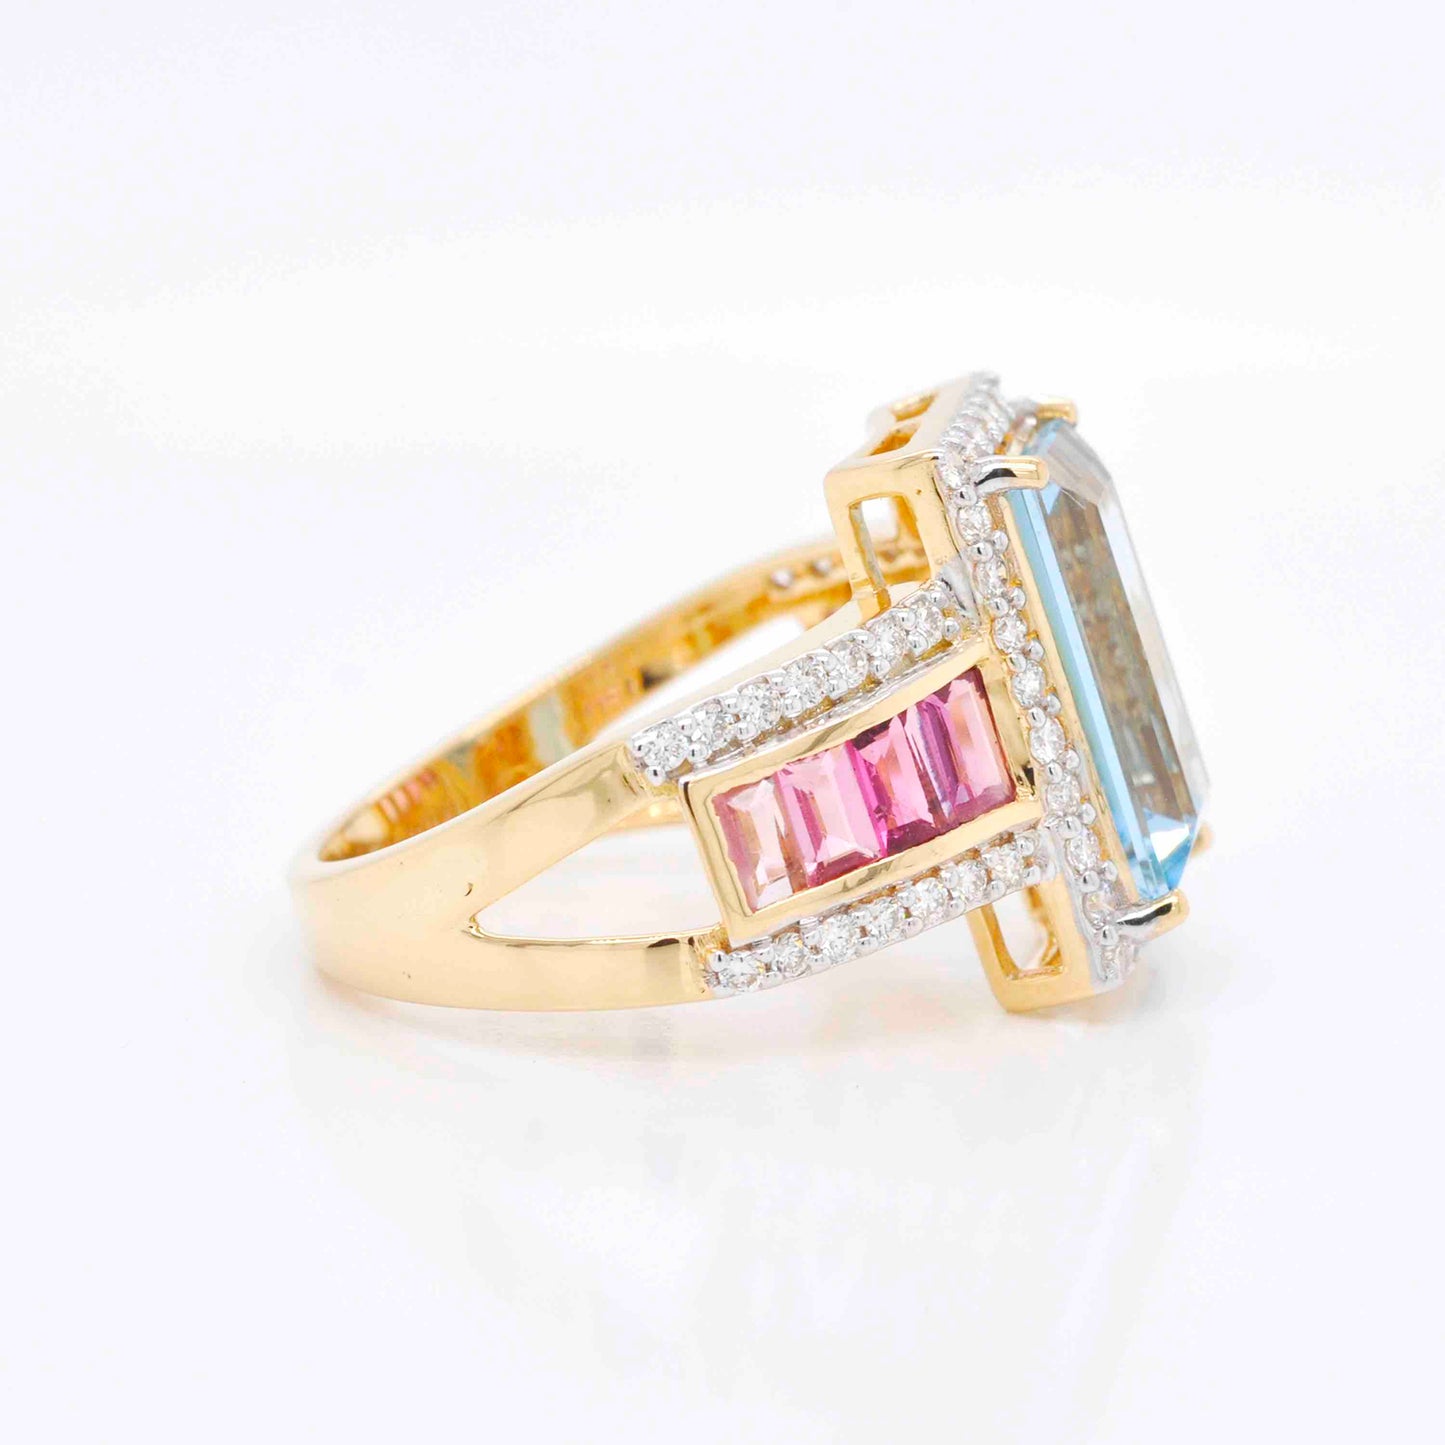 Aquamarine pink tourmaline jewelry